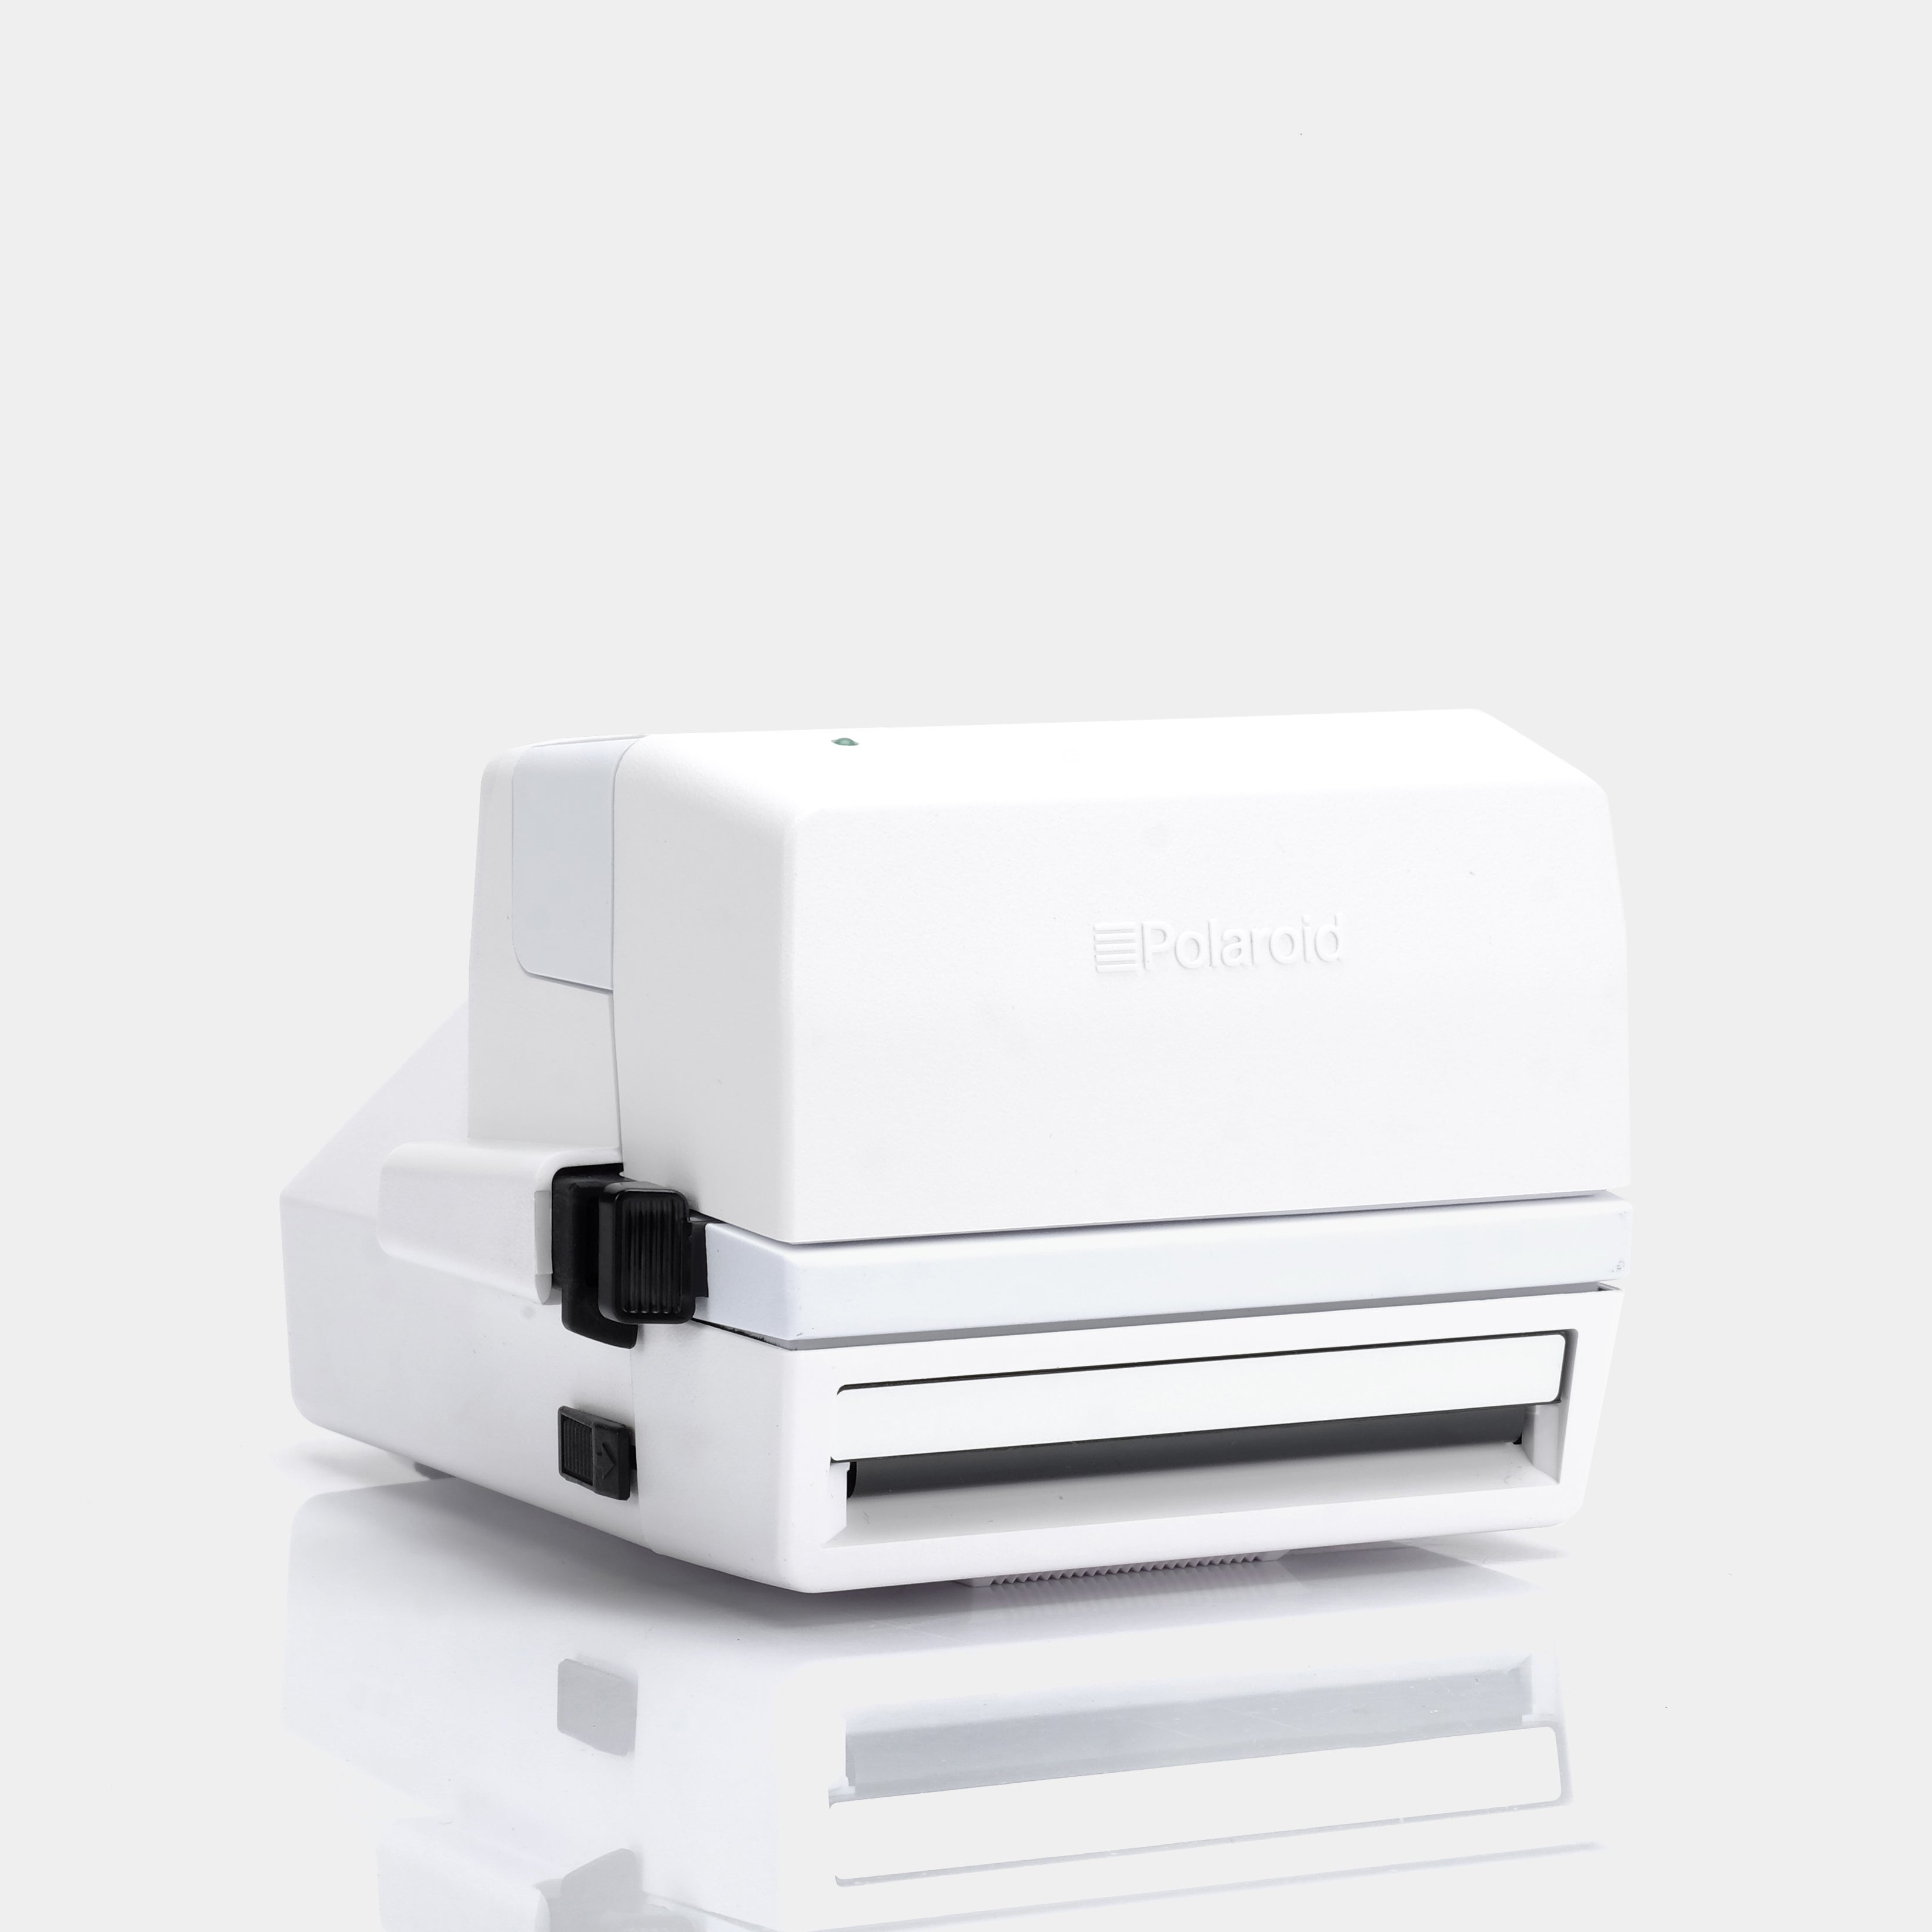 Polaroid 600 Aspen Ghost White Instant Film Camera